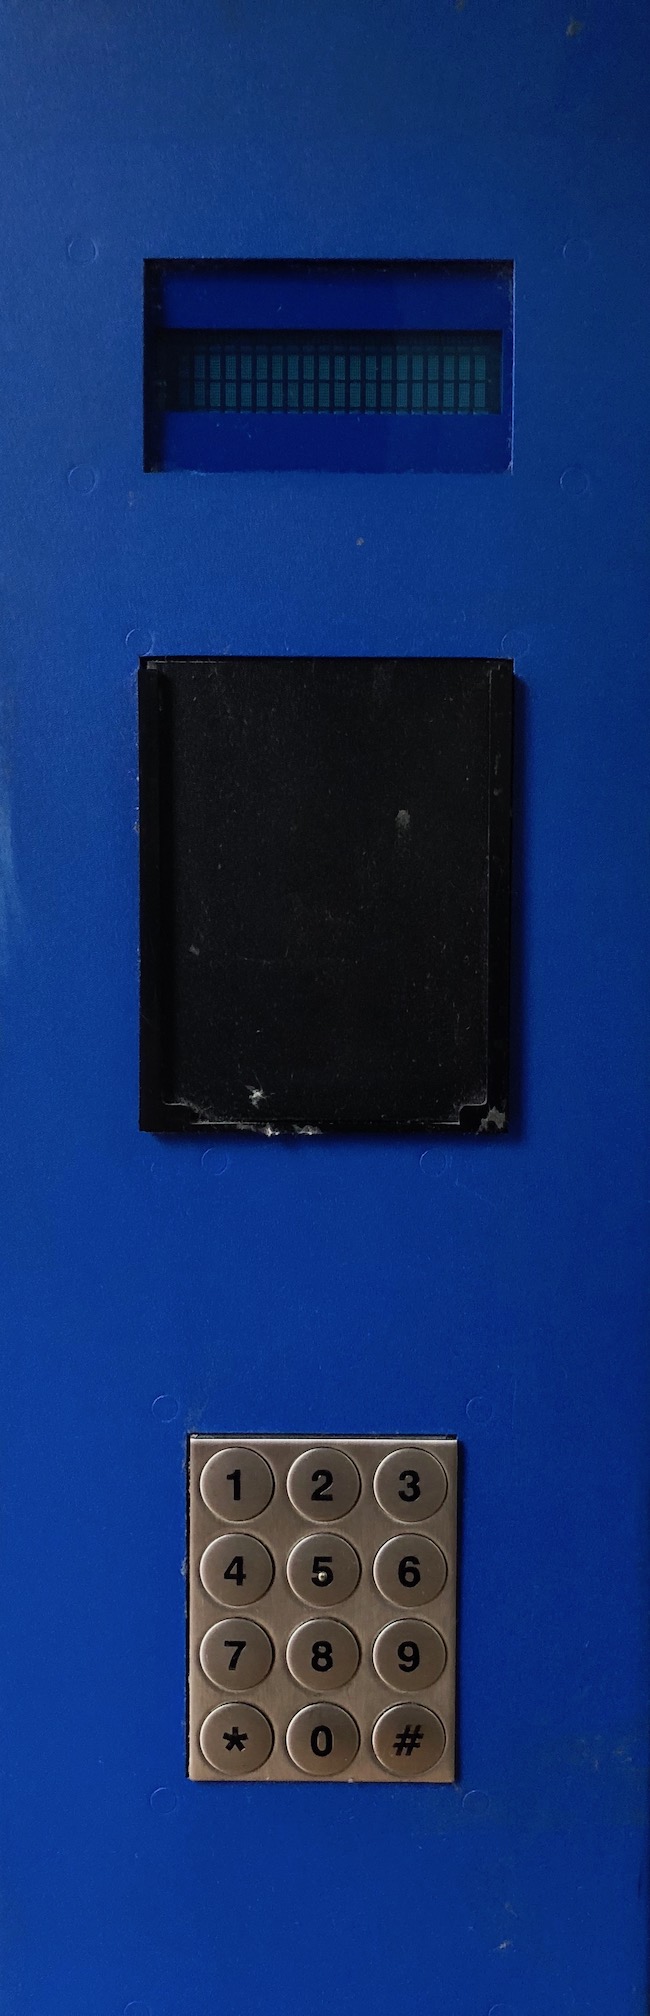 Fastenal vending machine keypad (metal buttons) Custom Cover 